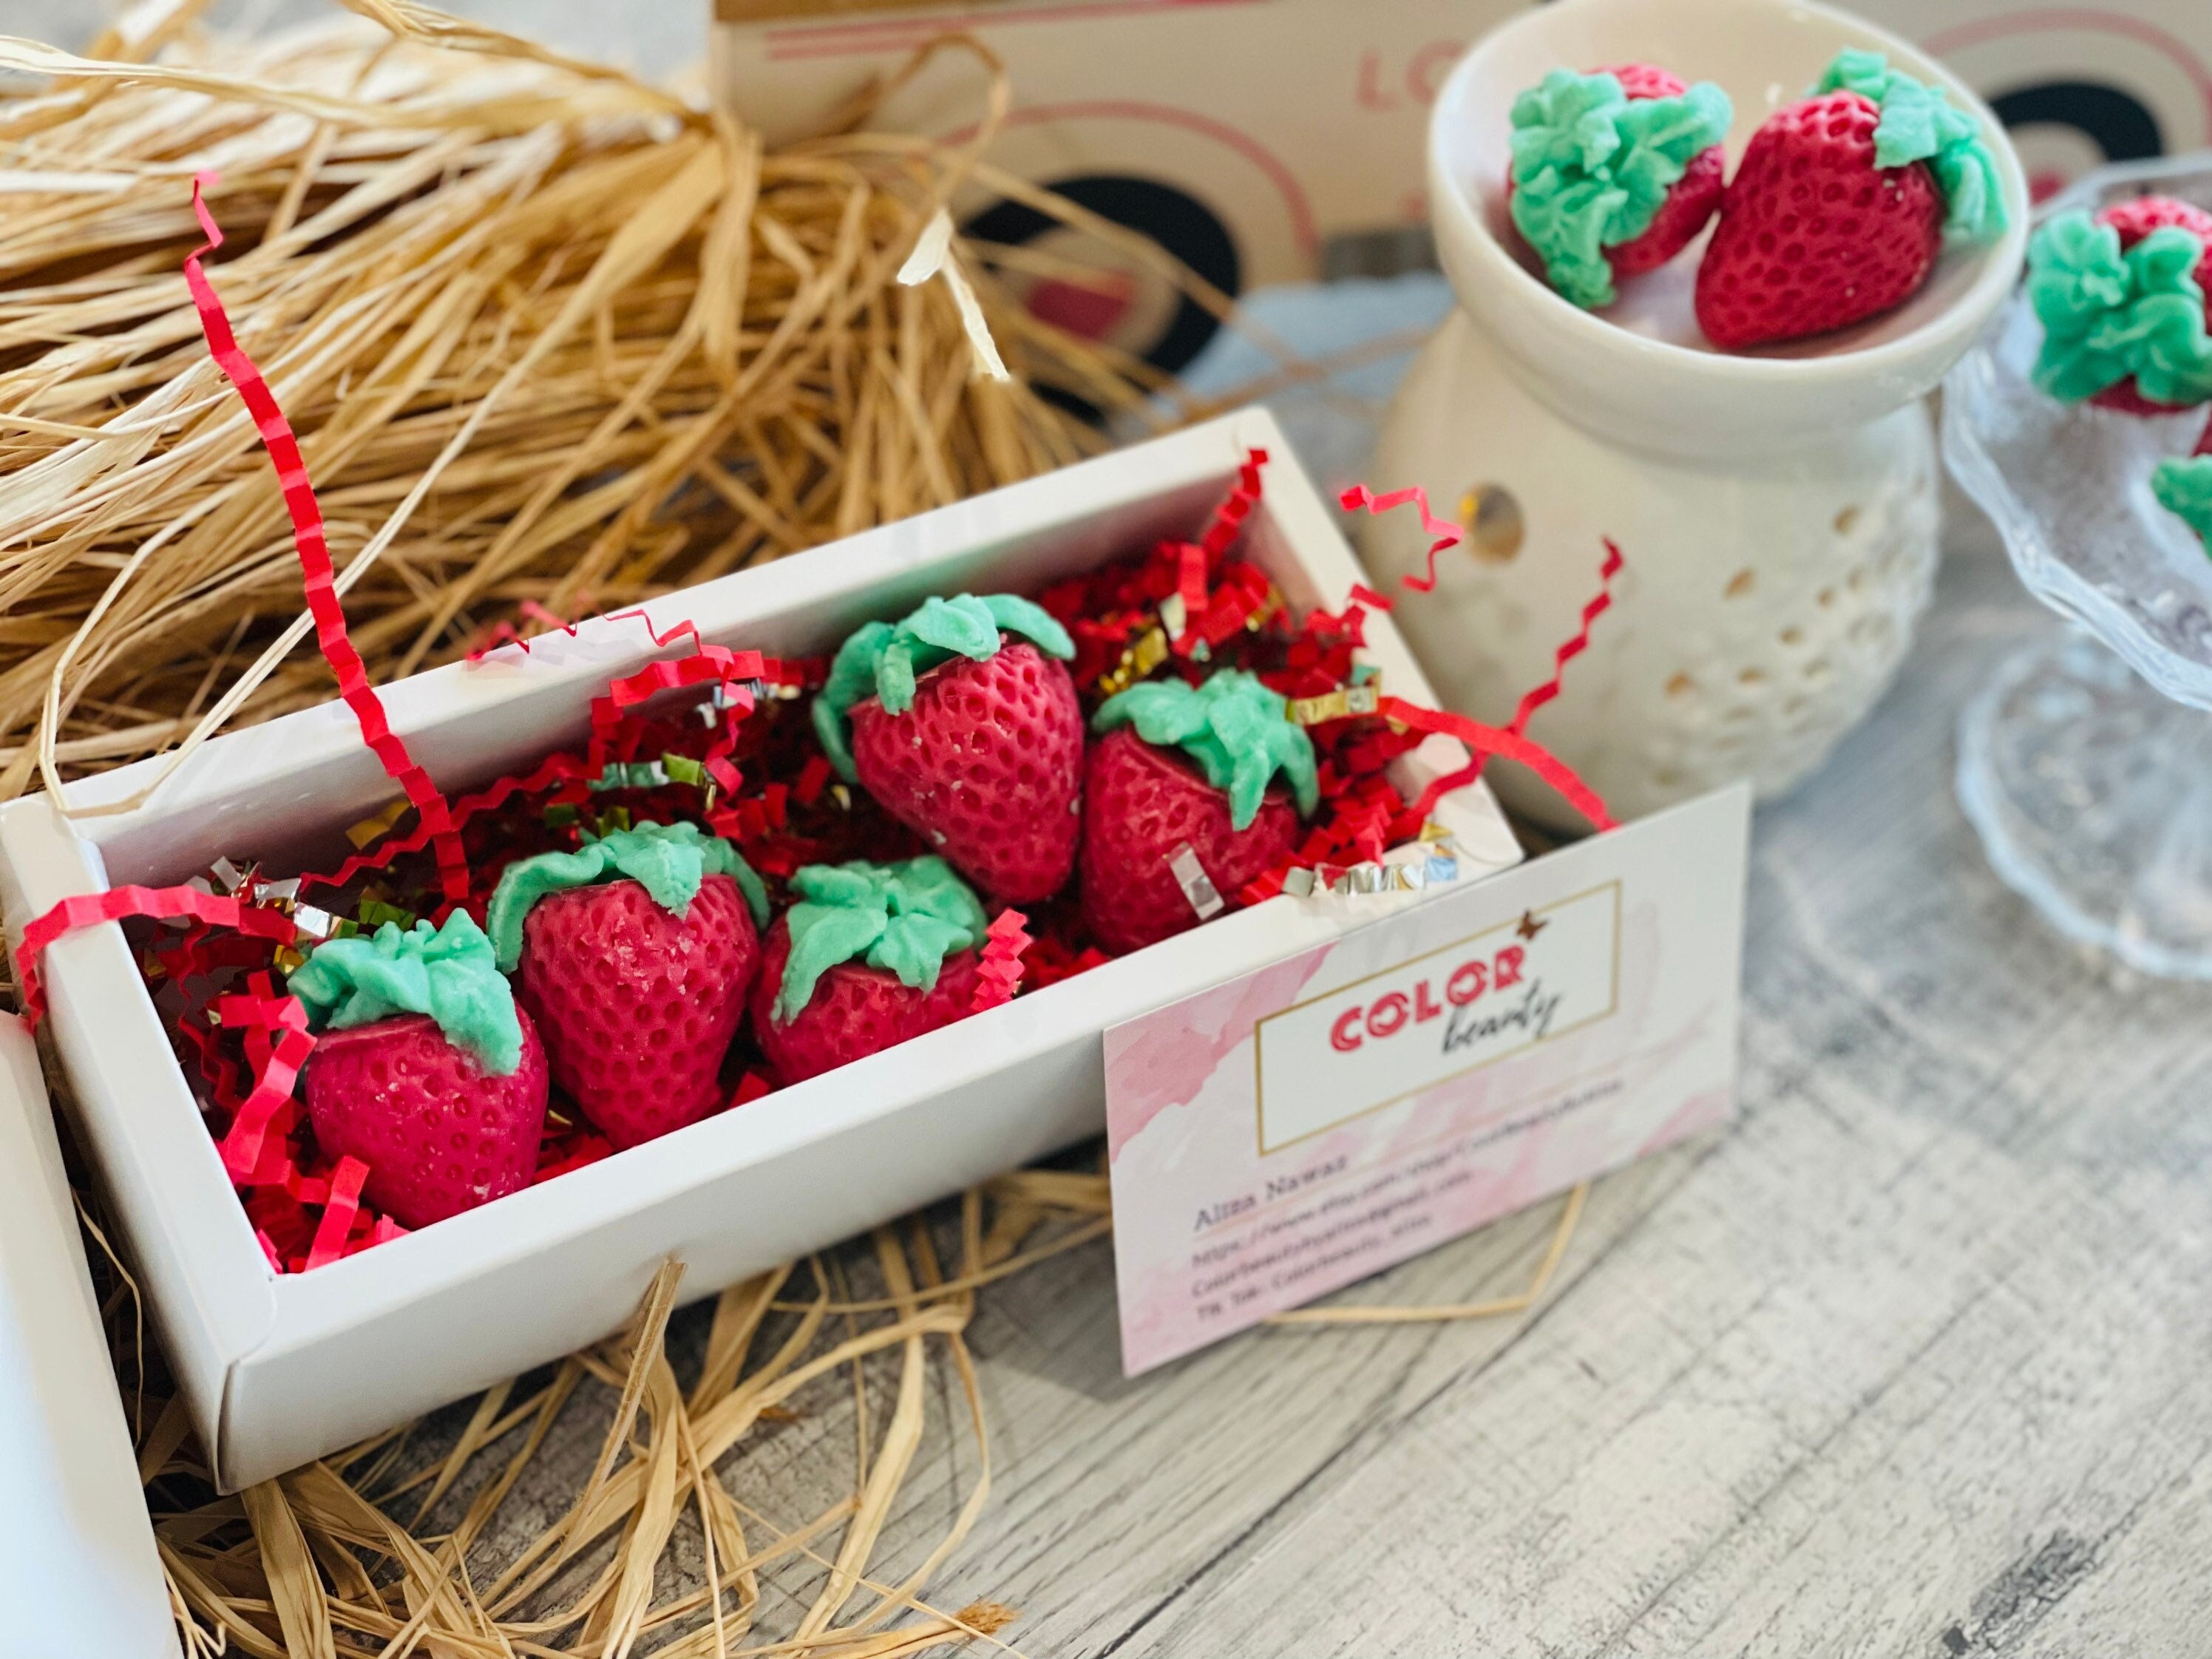 Strawberry Vanilla and Coconut Wax Melts - Strawberries & Cream